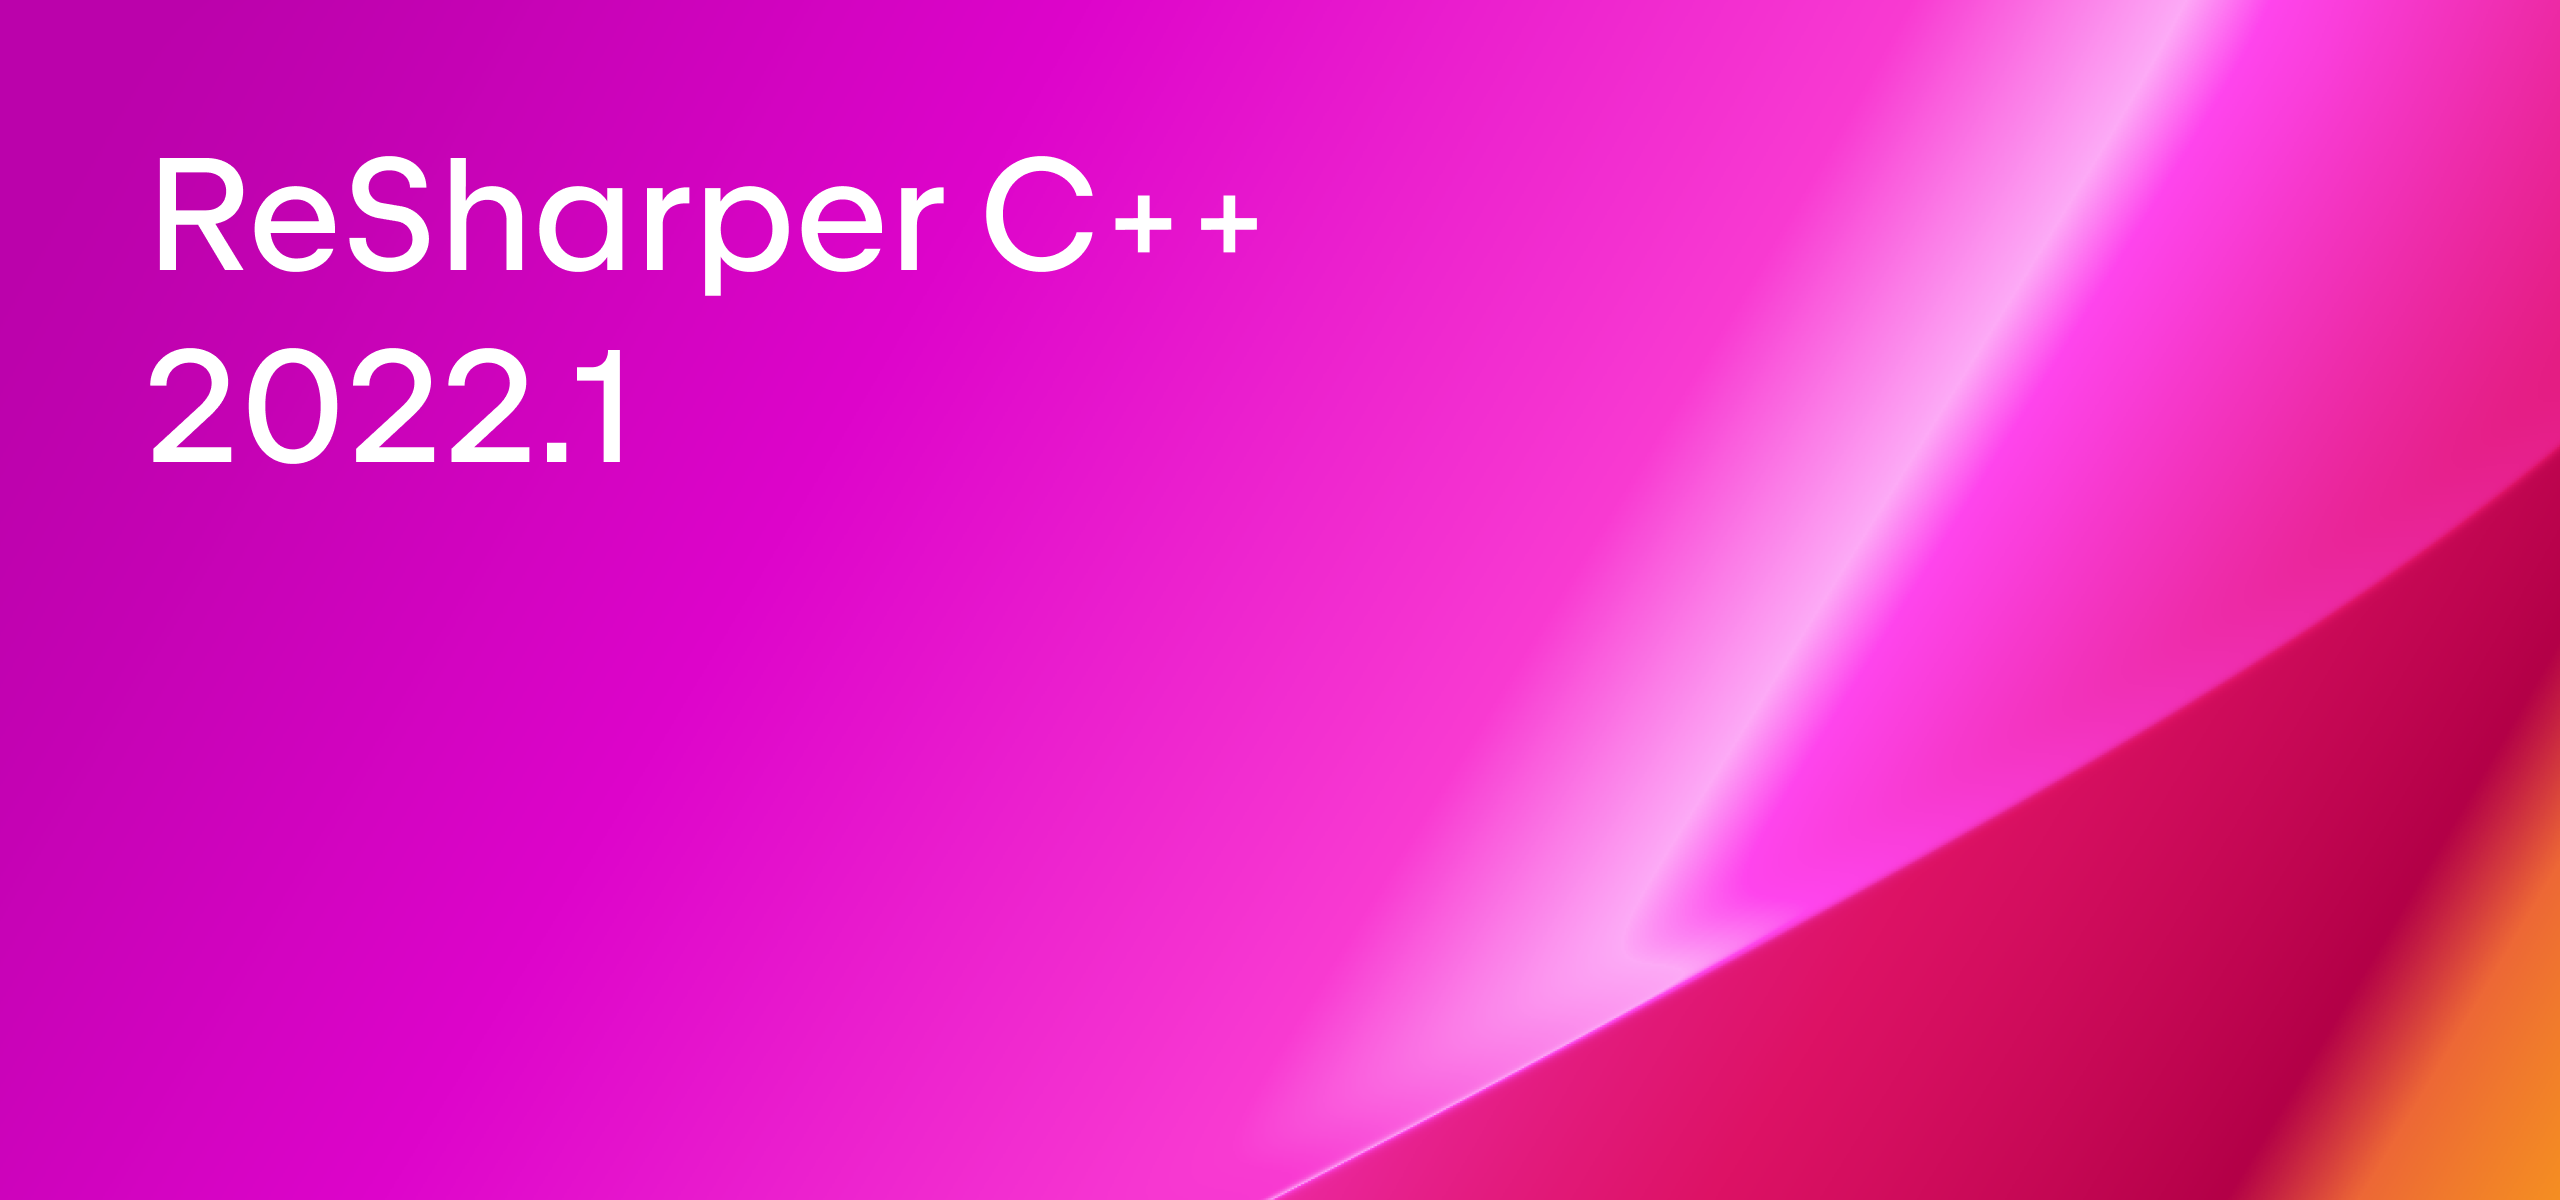 ReSharper C++ 2022.1